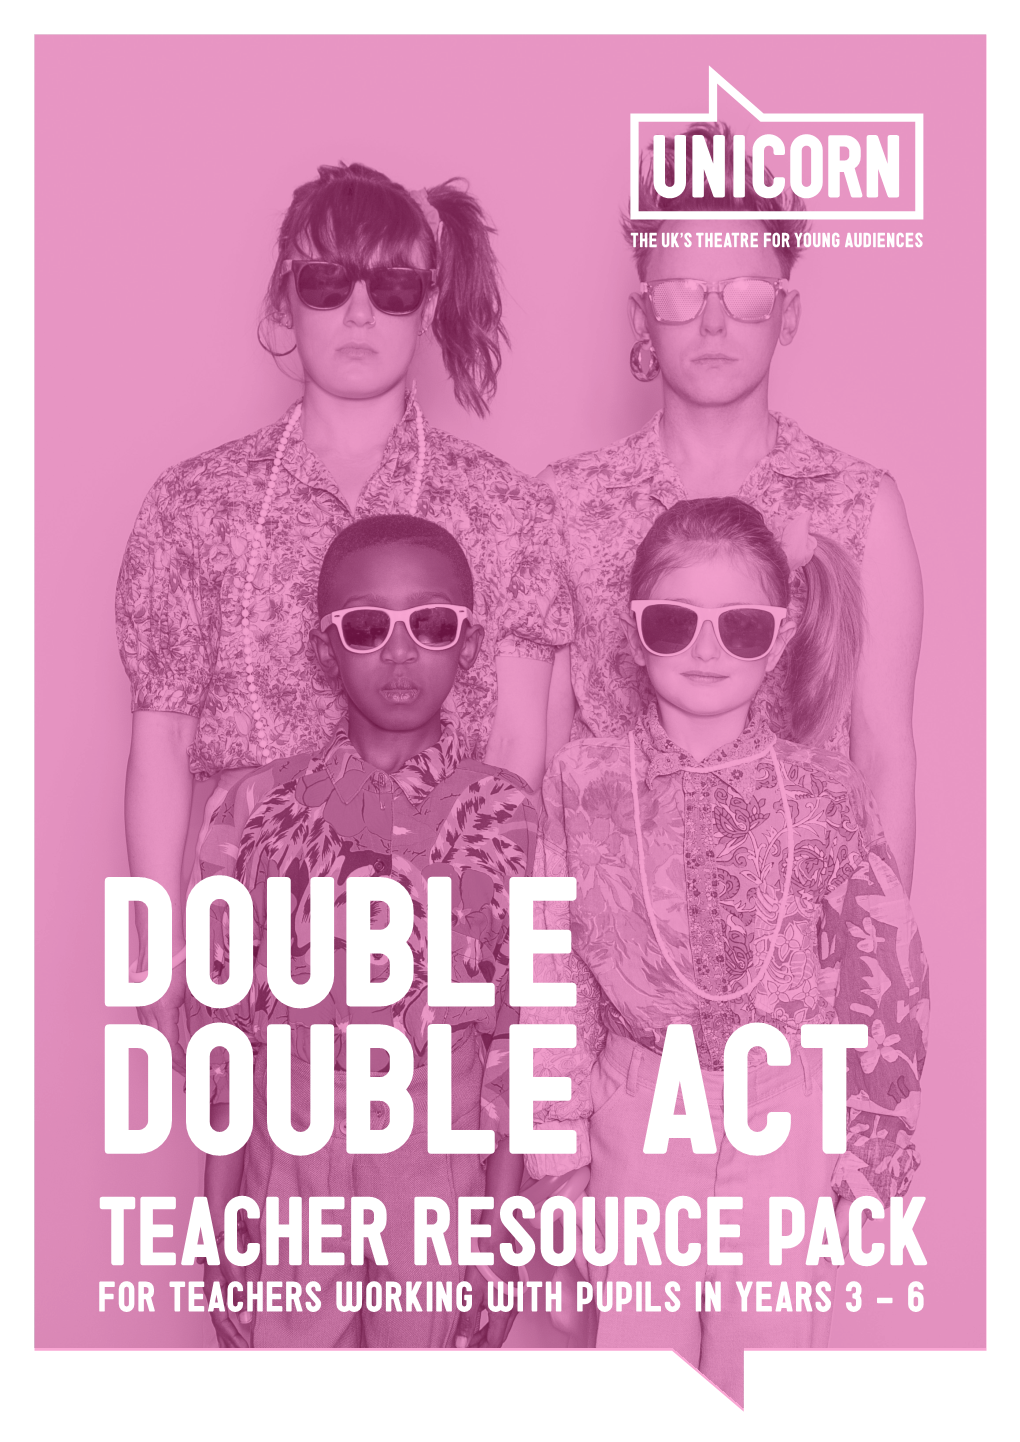 Free Teacher Resource Pack Here